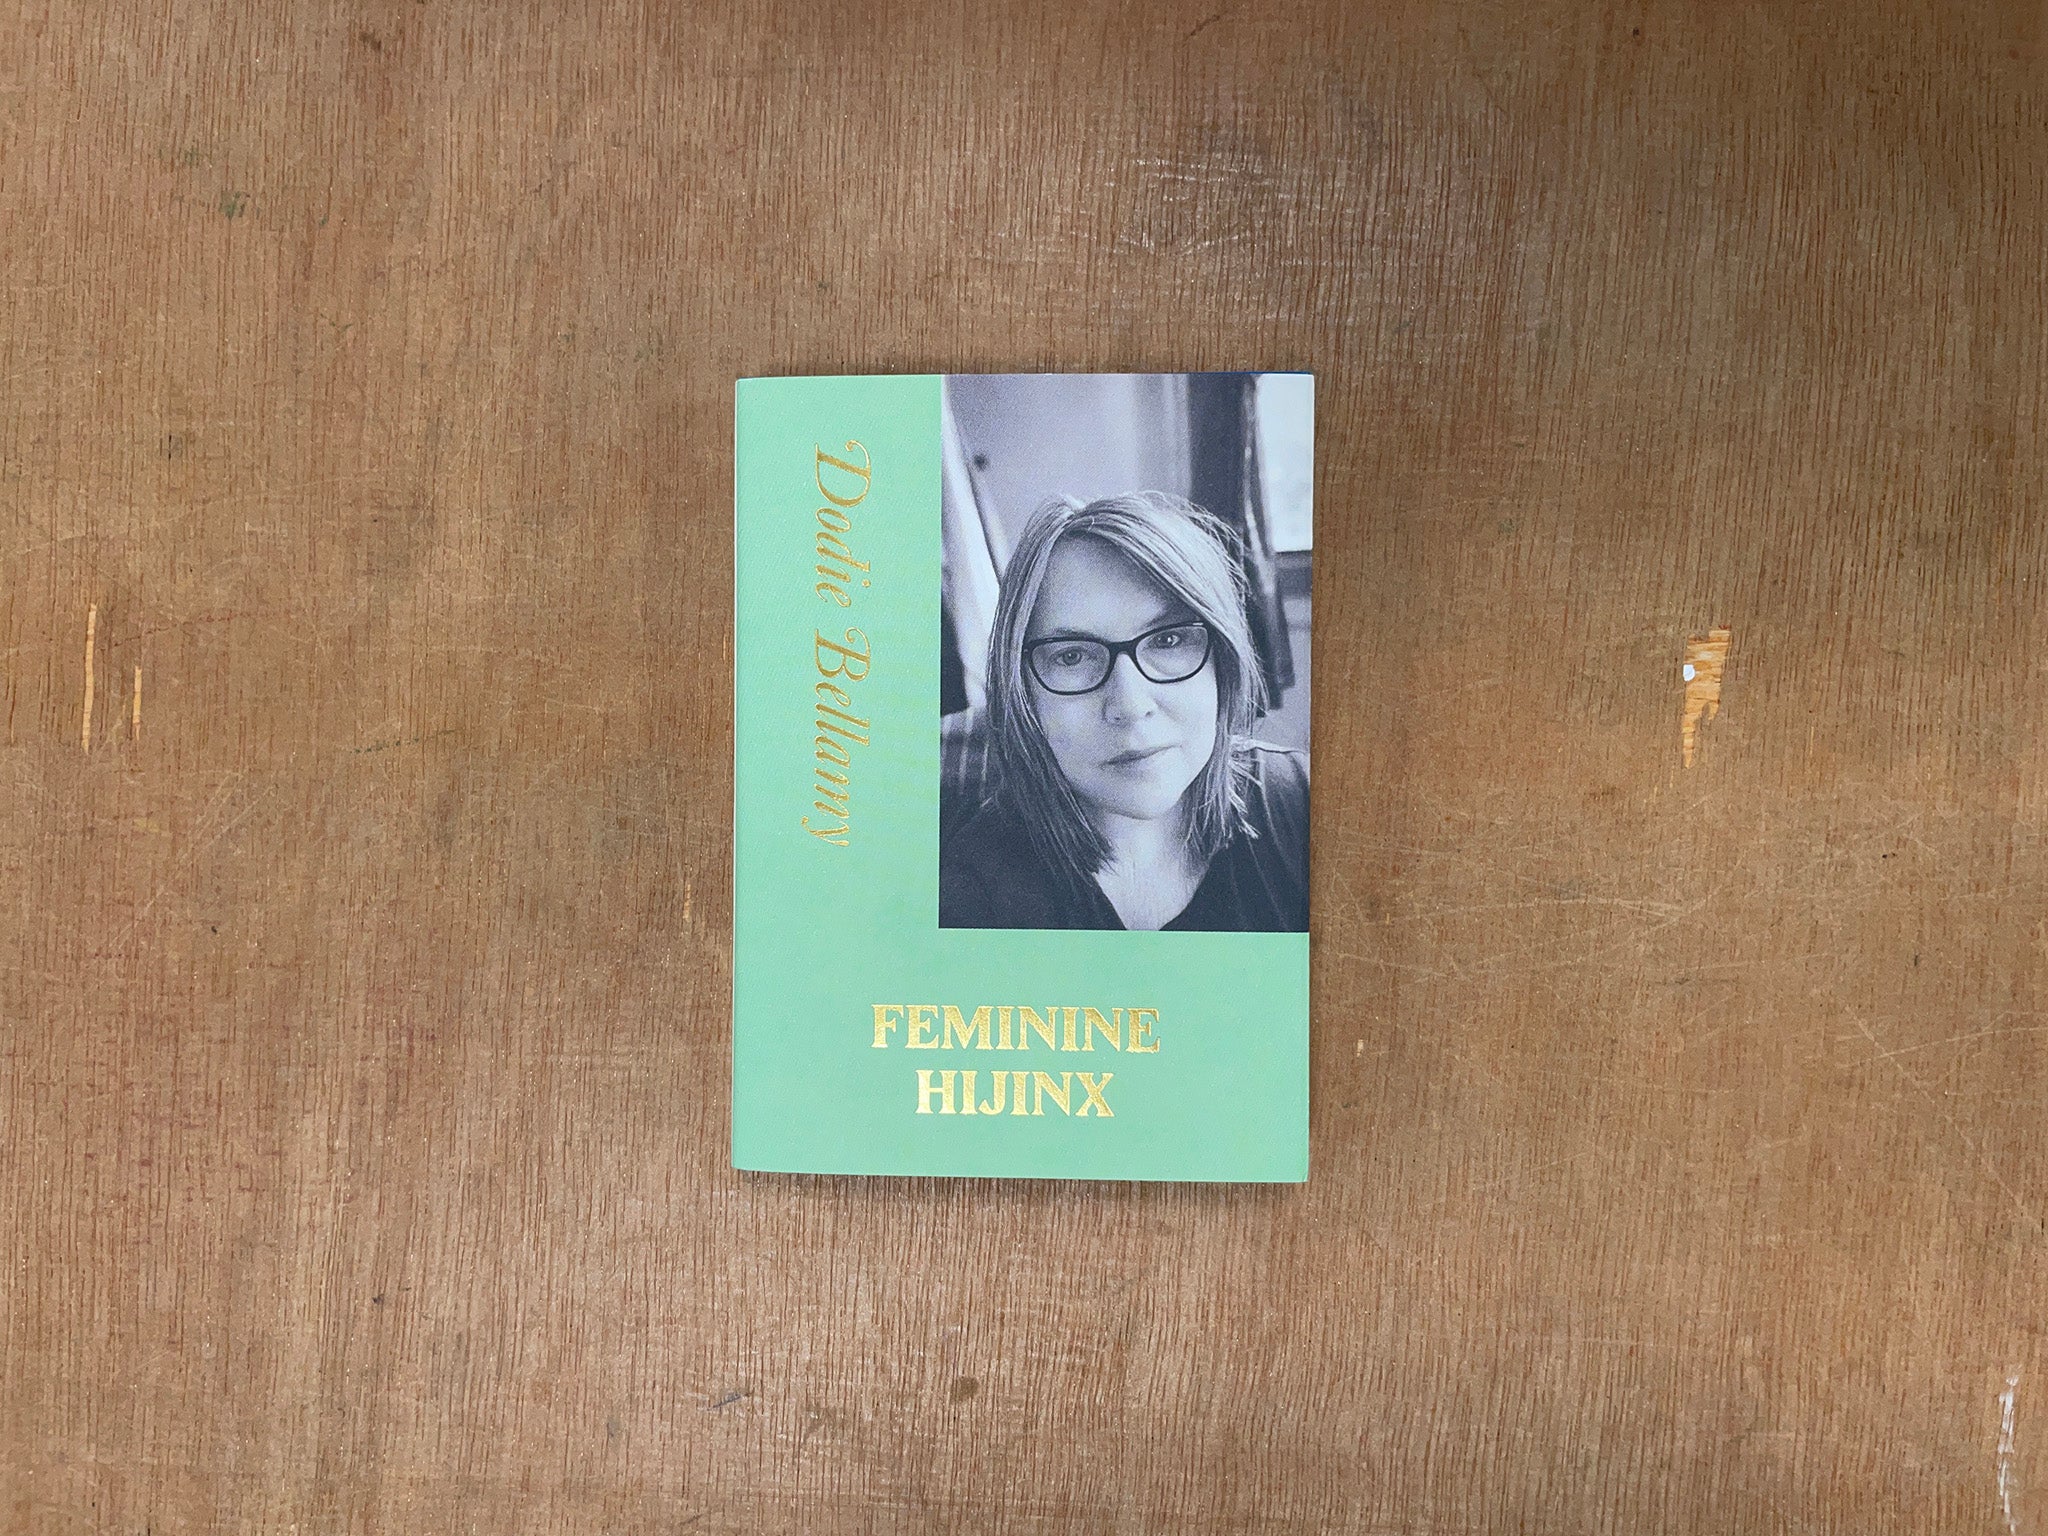 FEMININE HIJINX by Dodie Bellamy